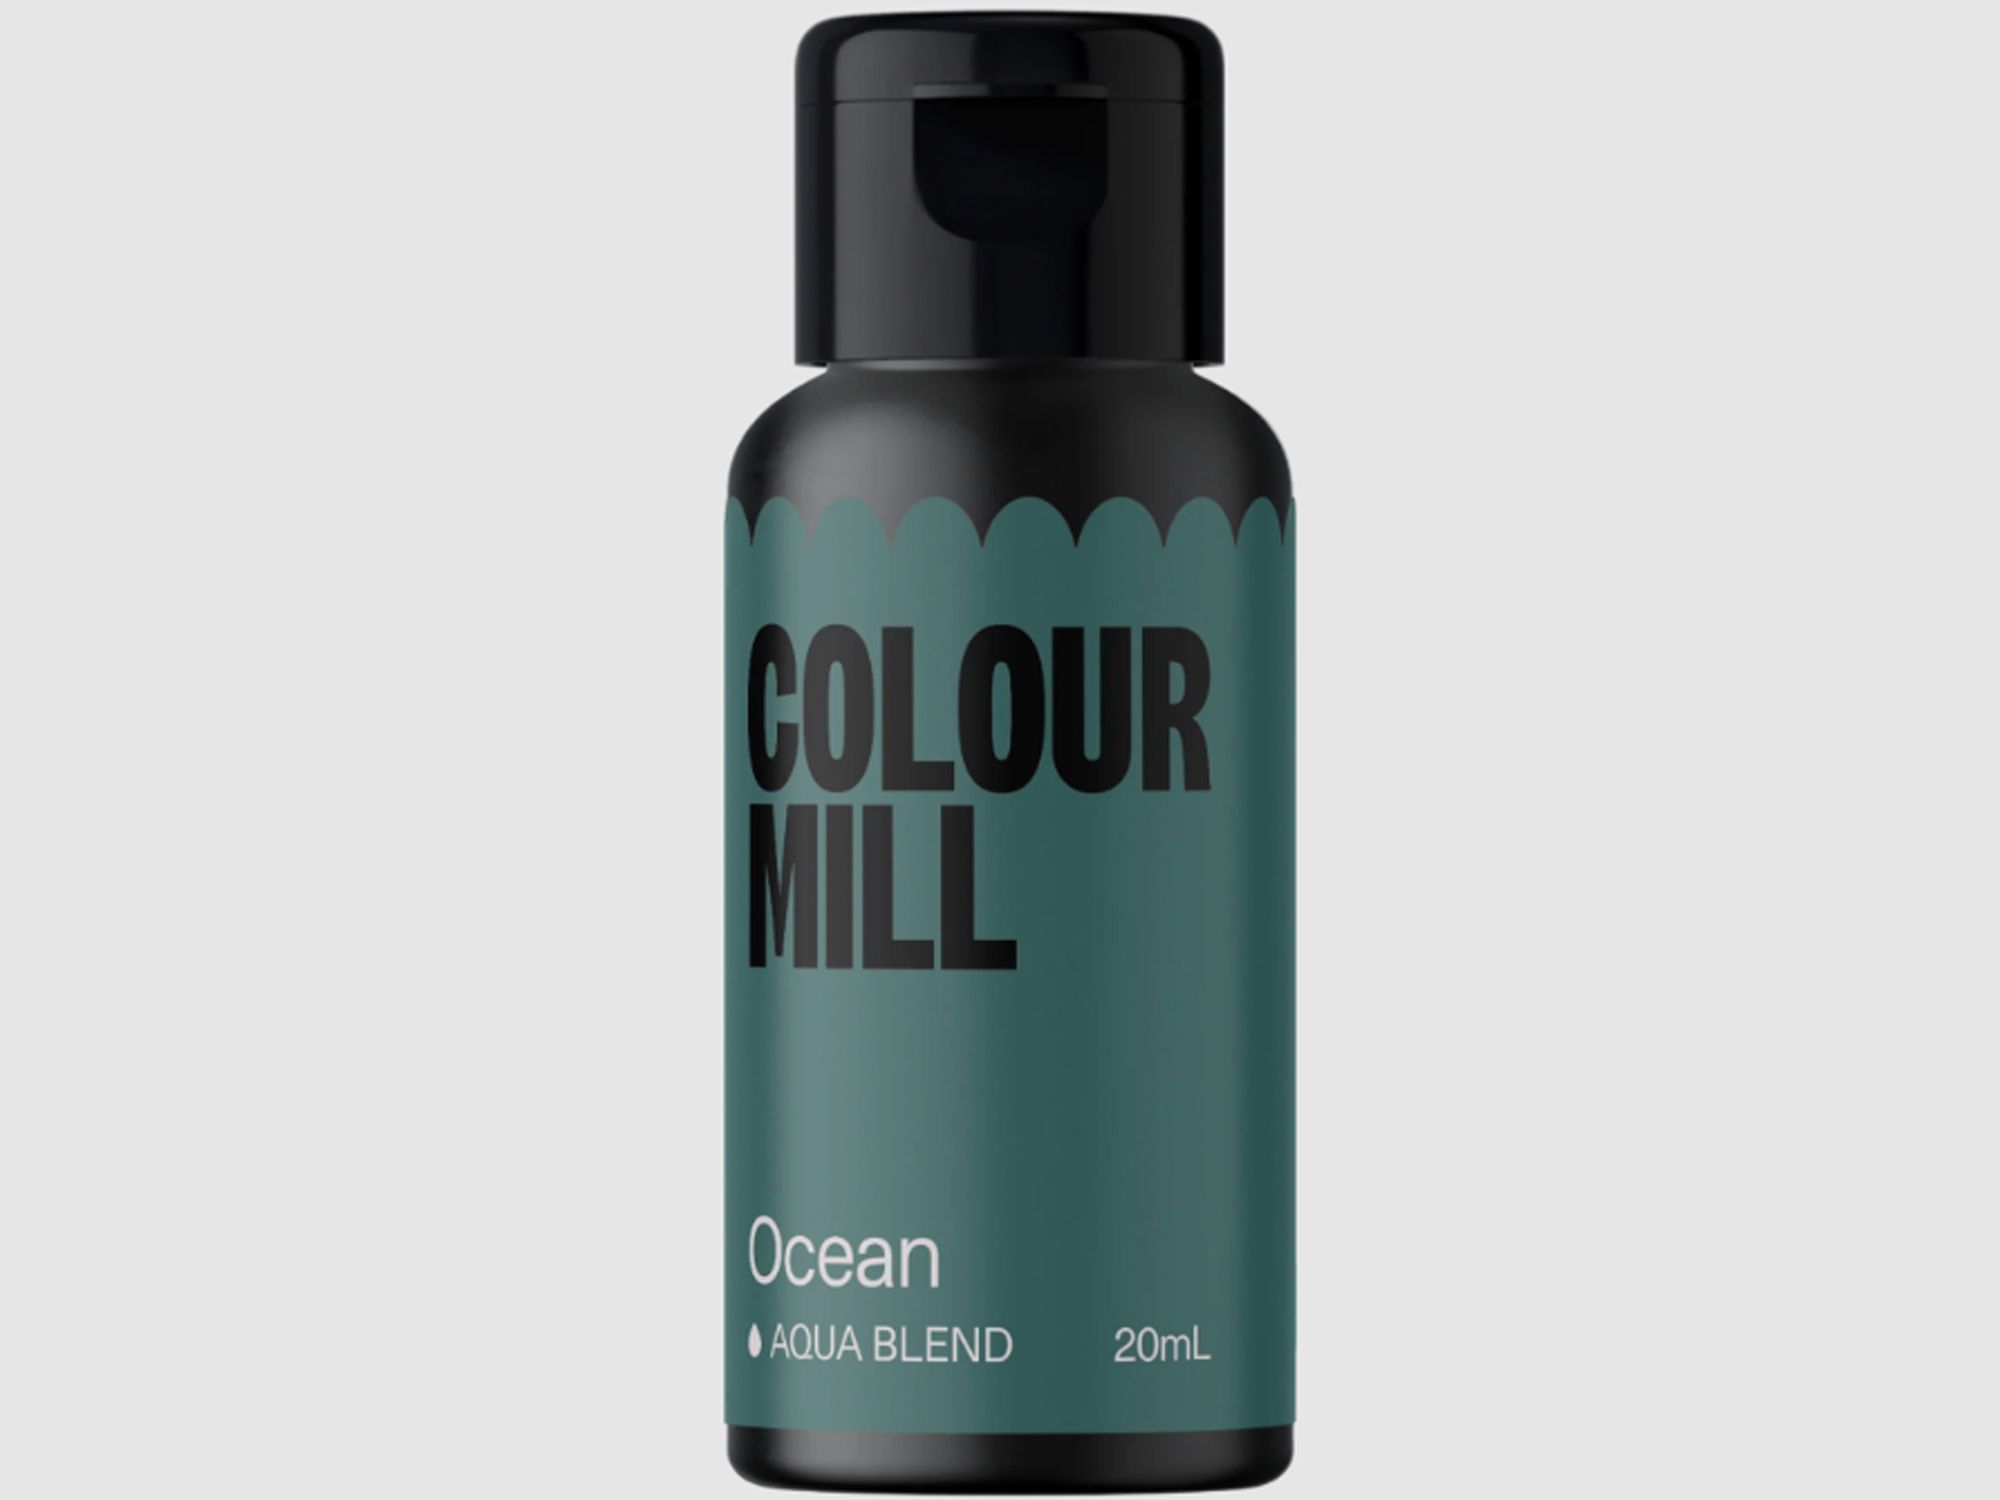 Colour Mill Ocean (Aqua Blend) 20ml